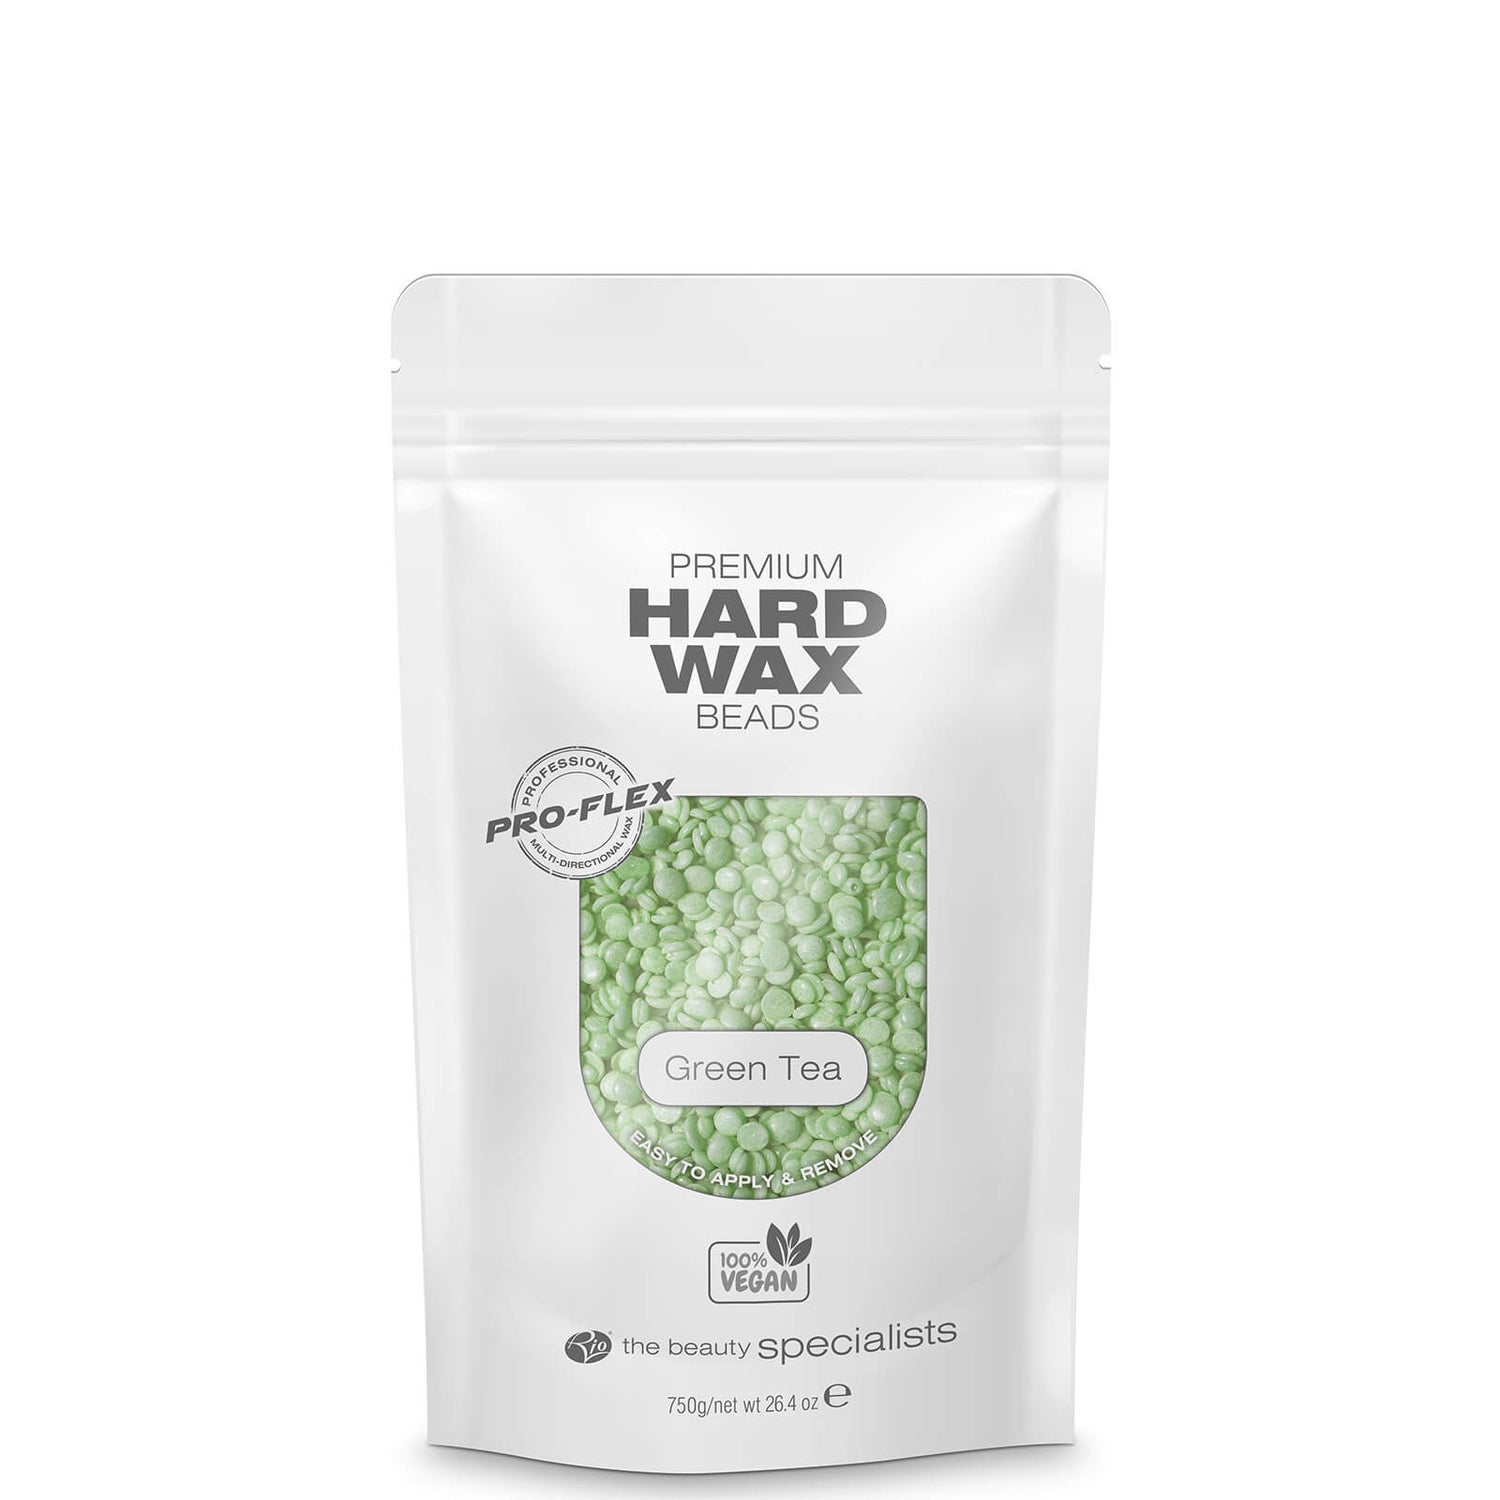 Rio Premium Hard Wax Beads - Green Tea